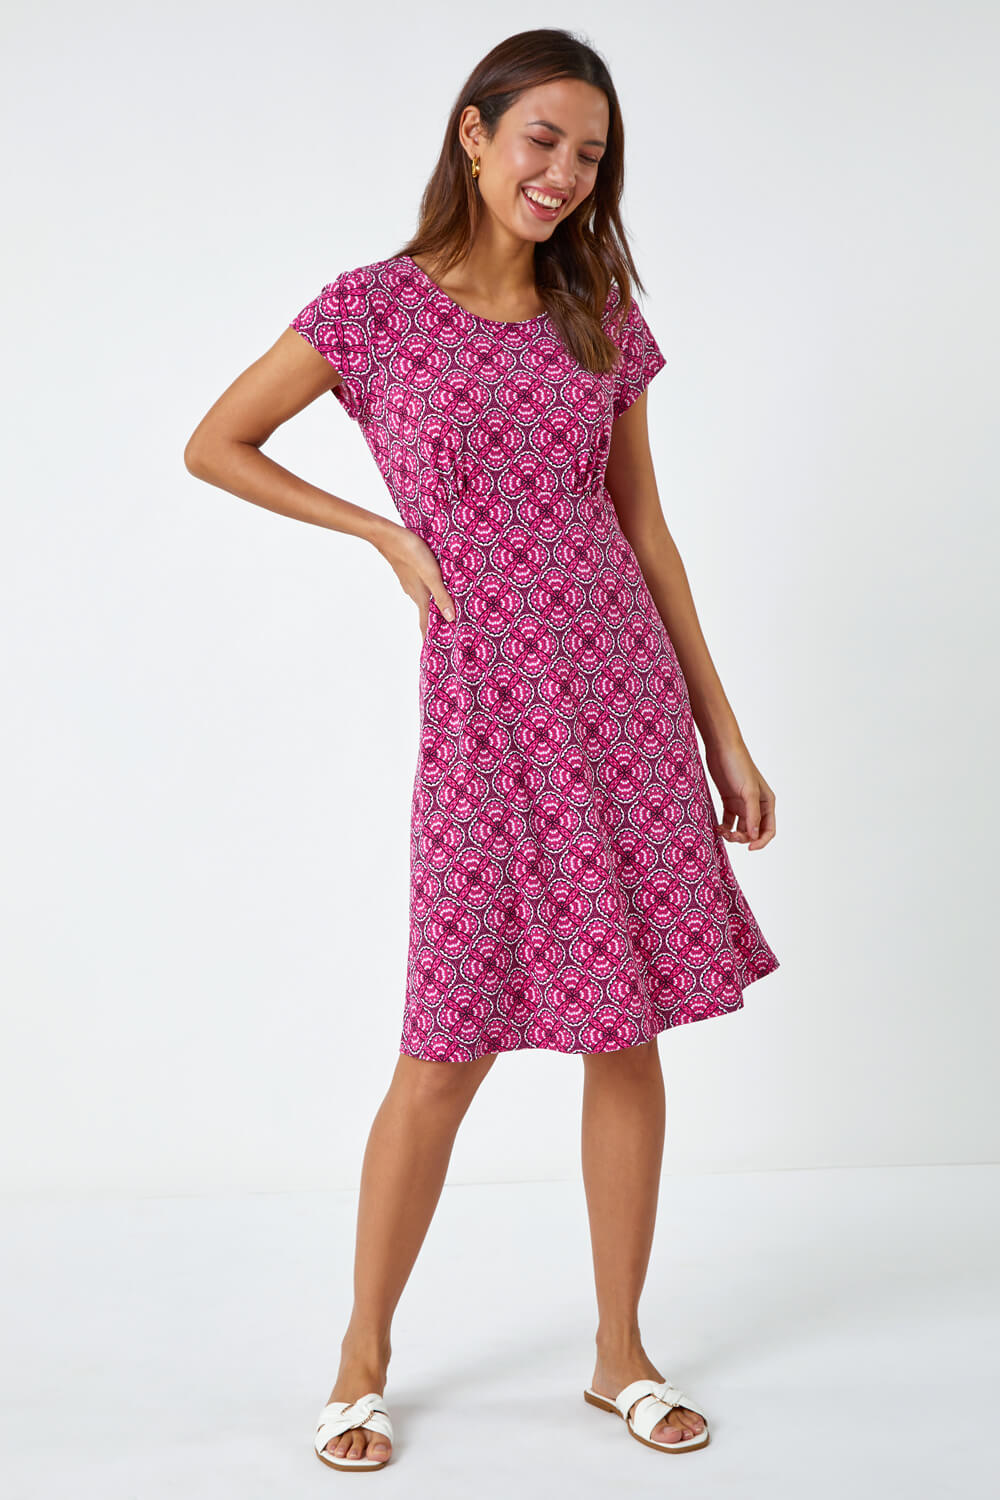 PINK Geo Print Textured Stretch Dress, Image 2 of 5